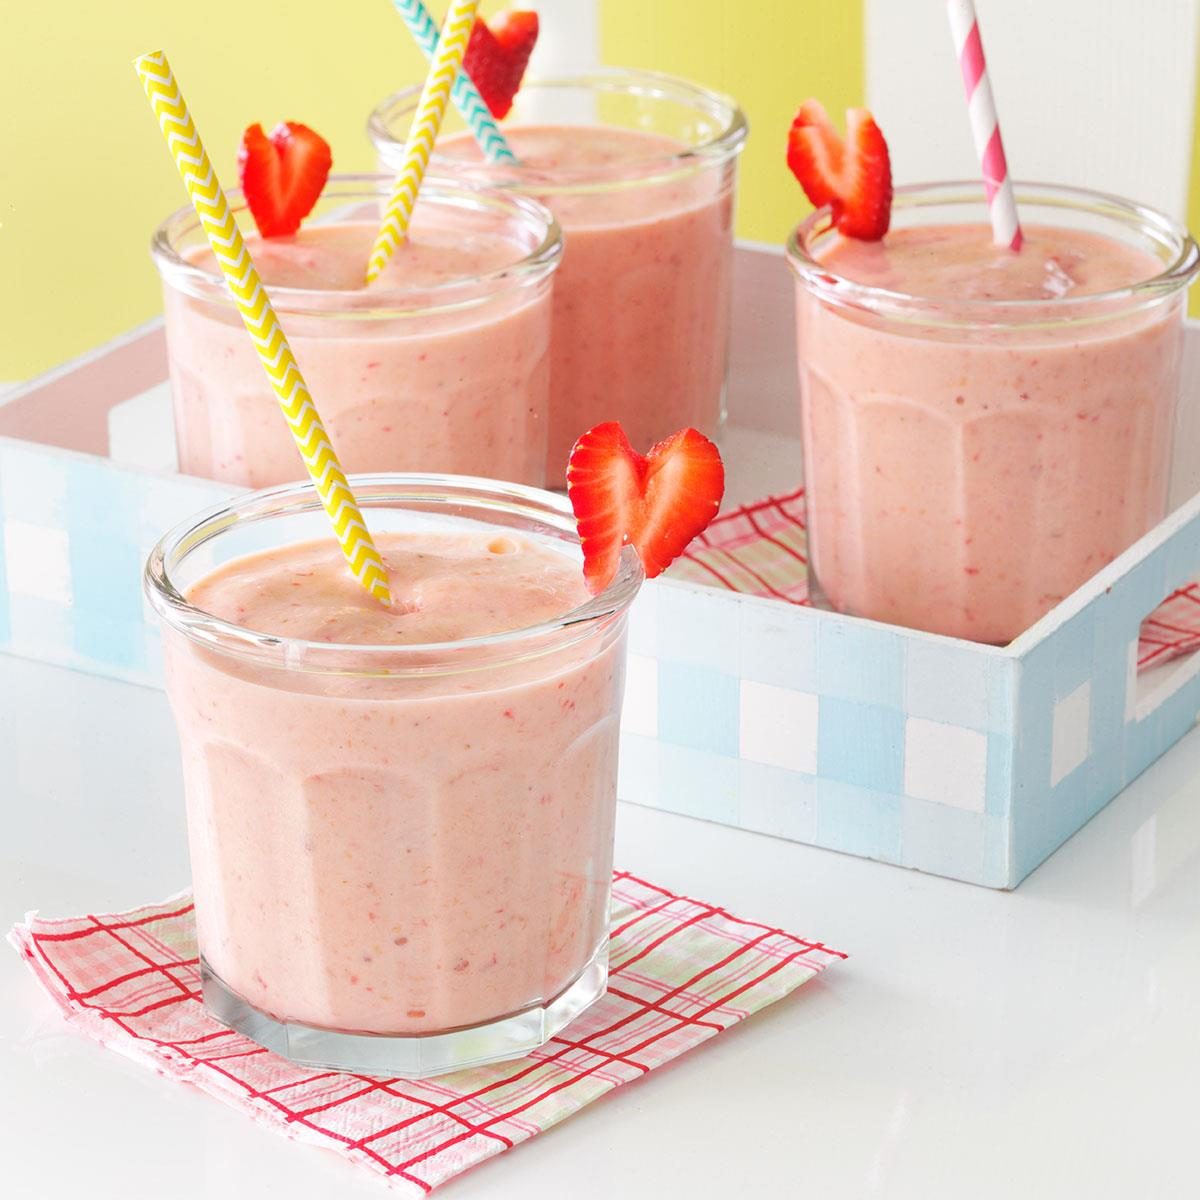 Strawberry-Peach Milk Shakes